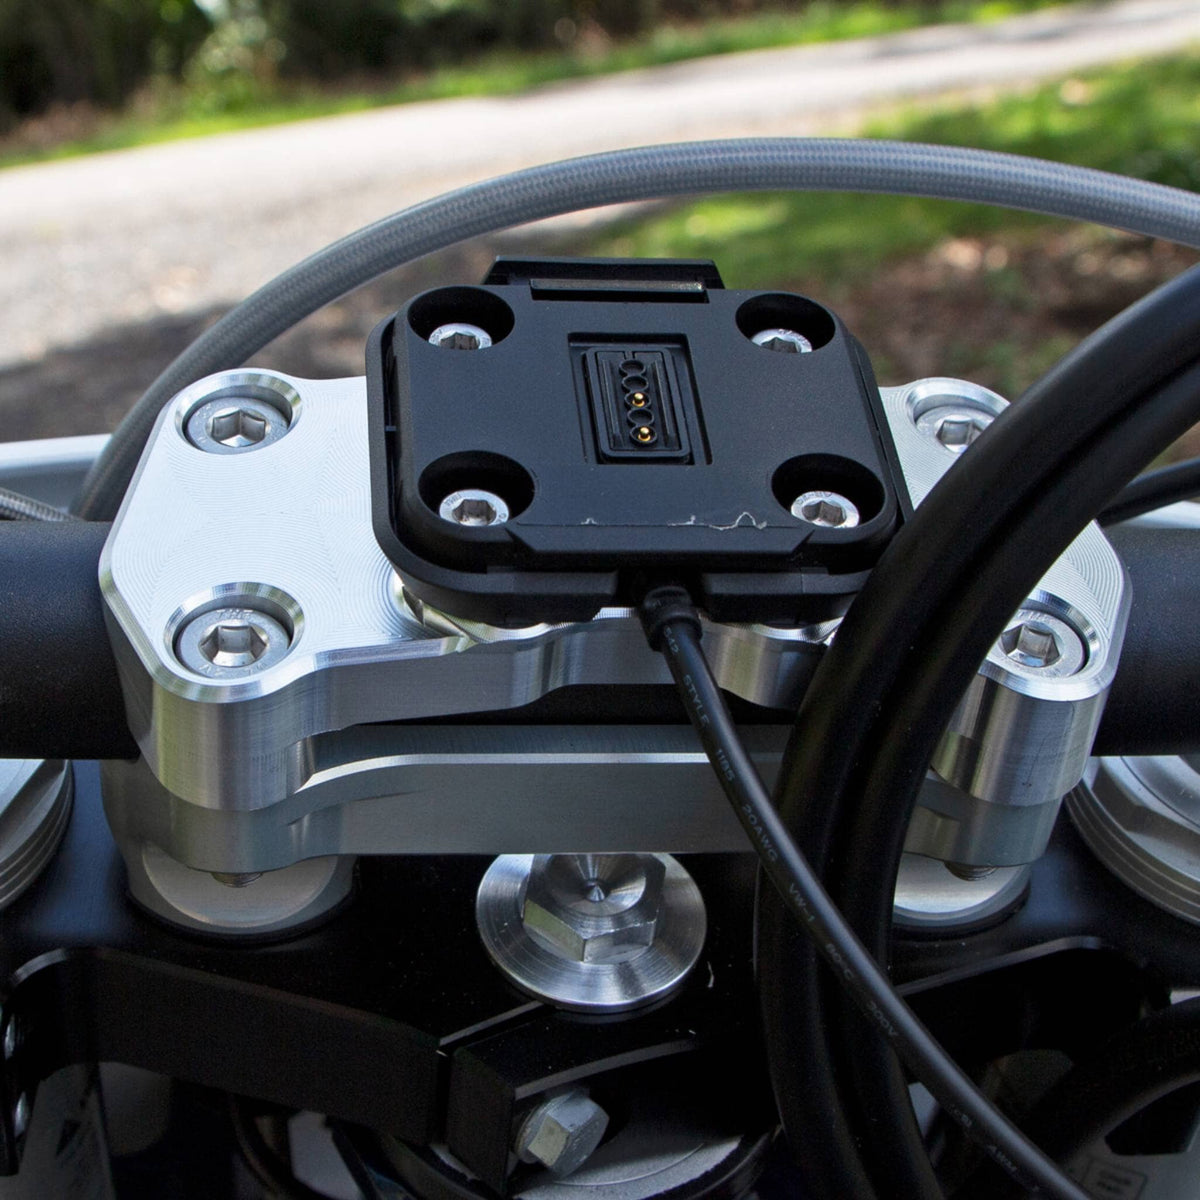 AMPS GPS Bar Mount - KTM, Husqvarna, GasGas, Beta, Sherco Motocycle Steering Dampers MSC Moto 